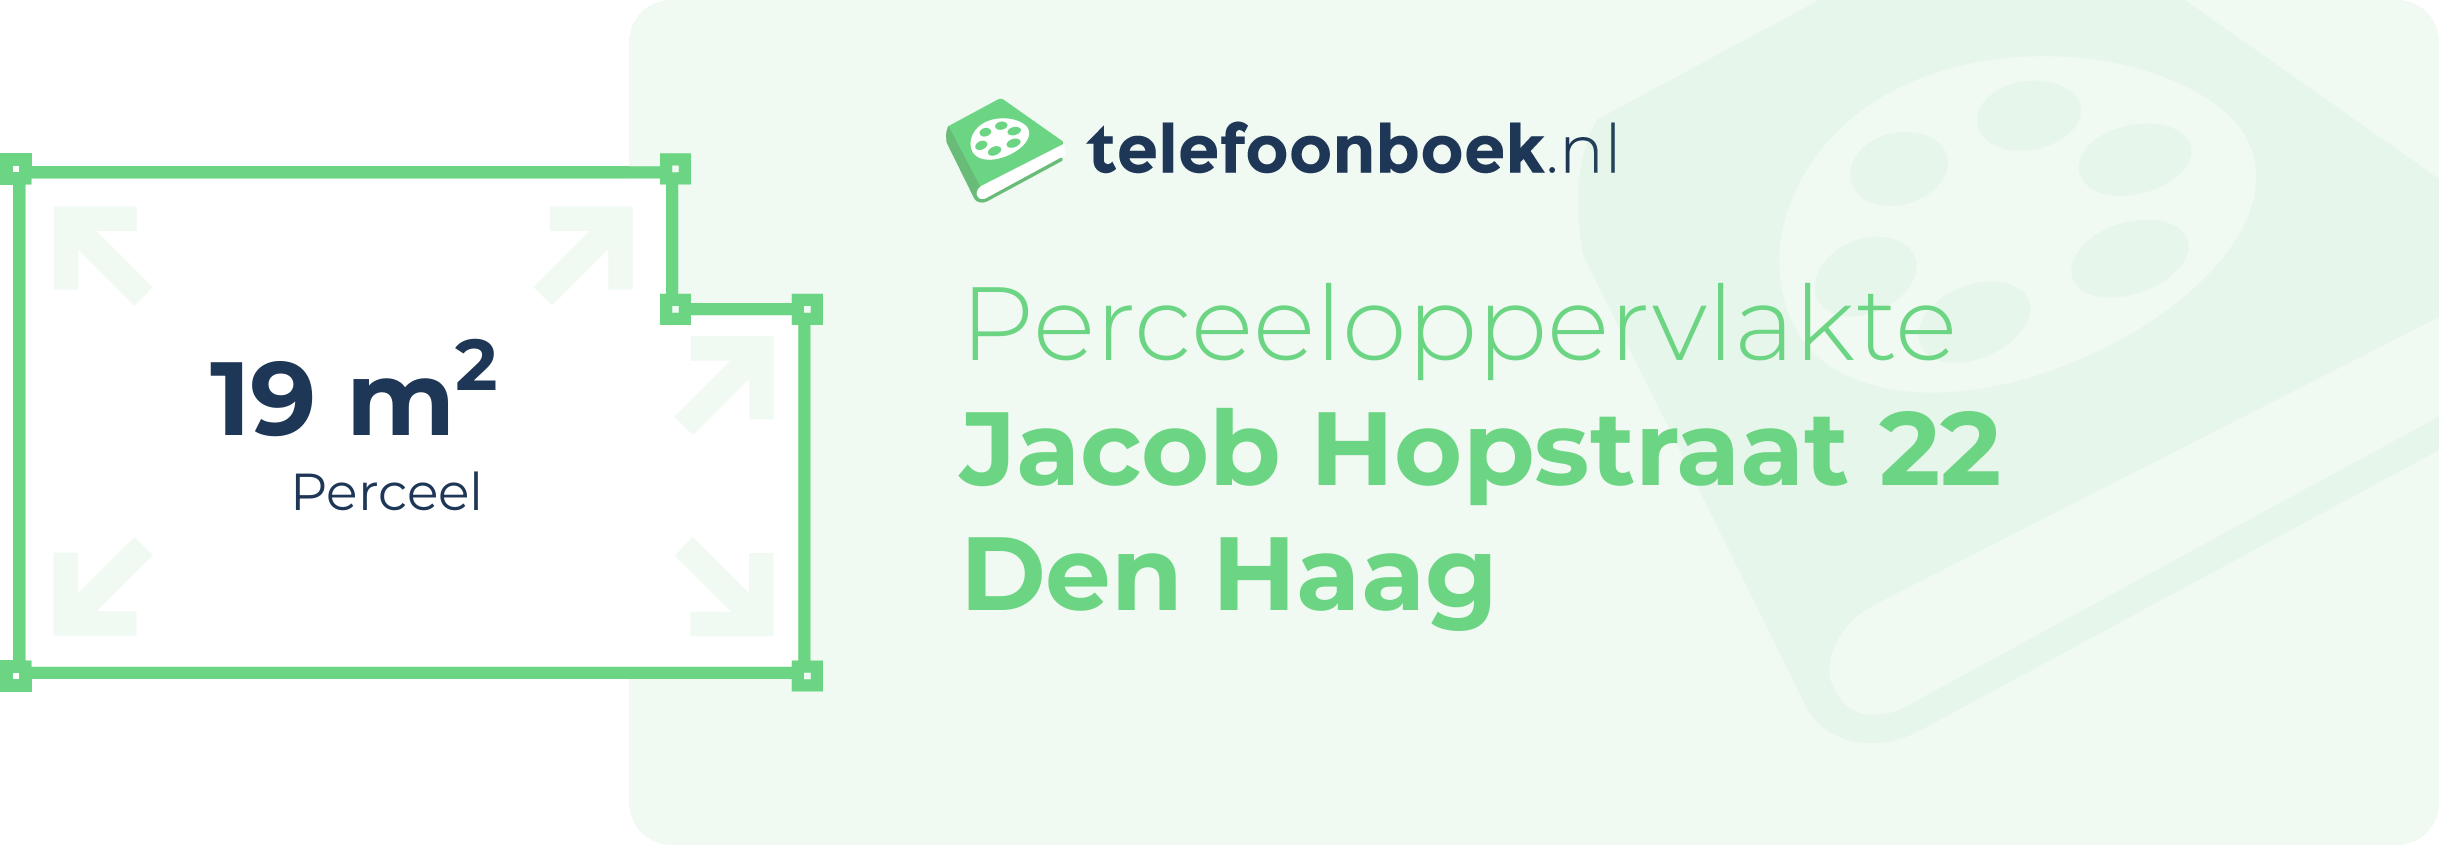 Perceeloppervlakte Jacob Hopstraat 22 Den Haag